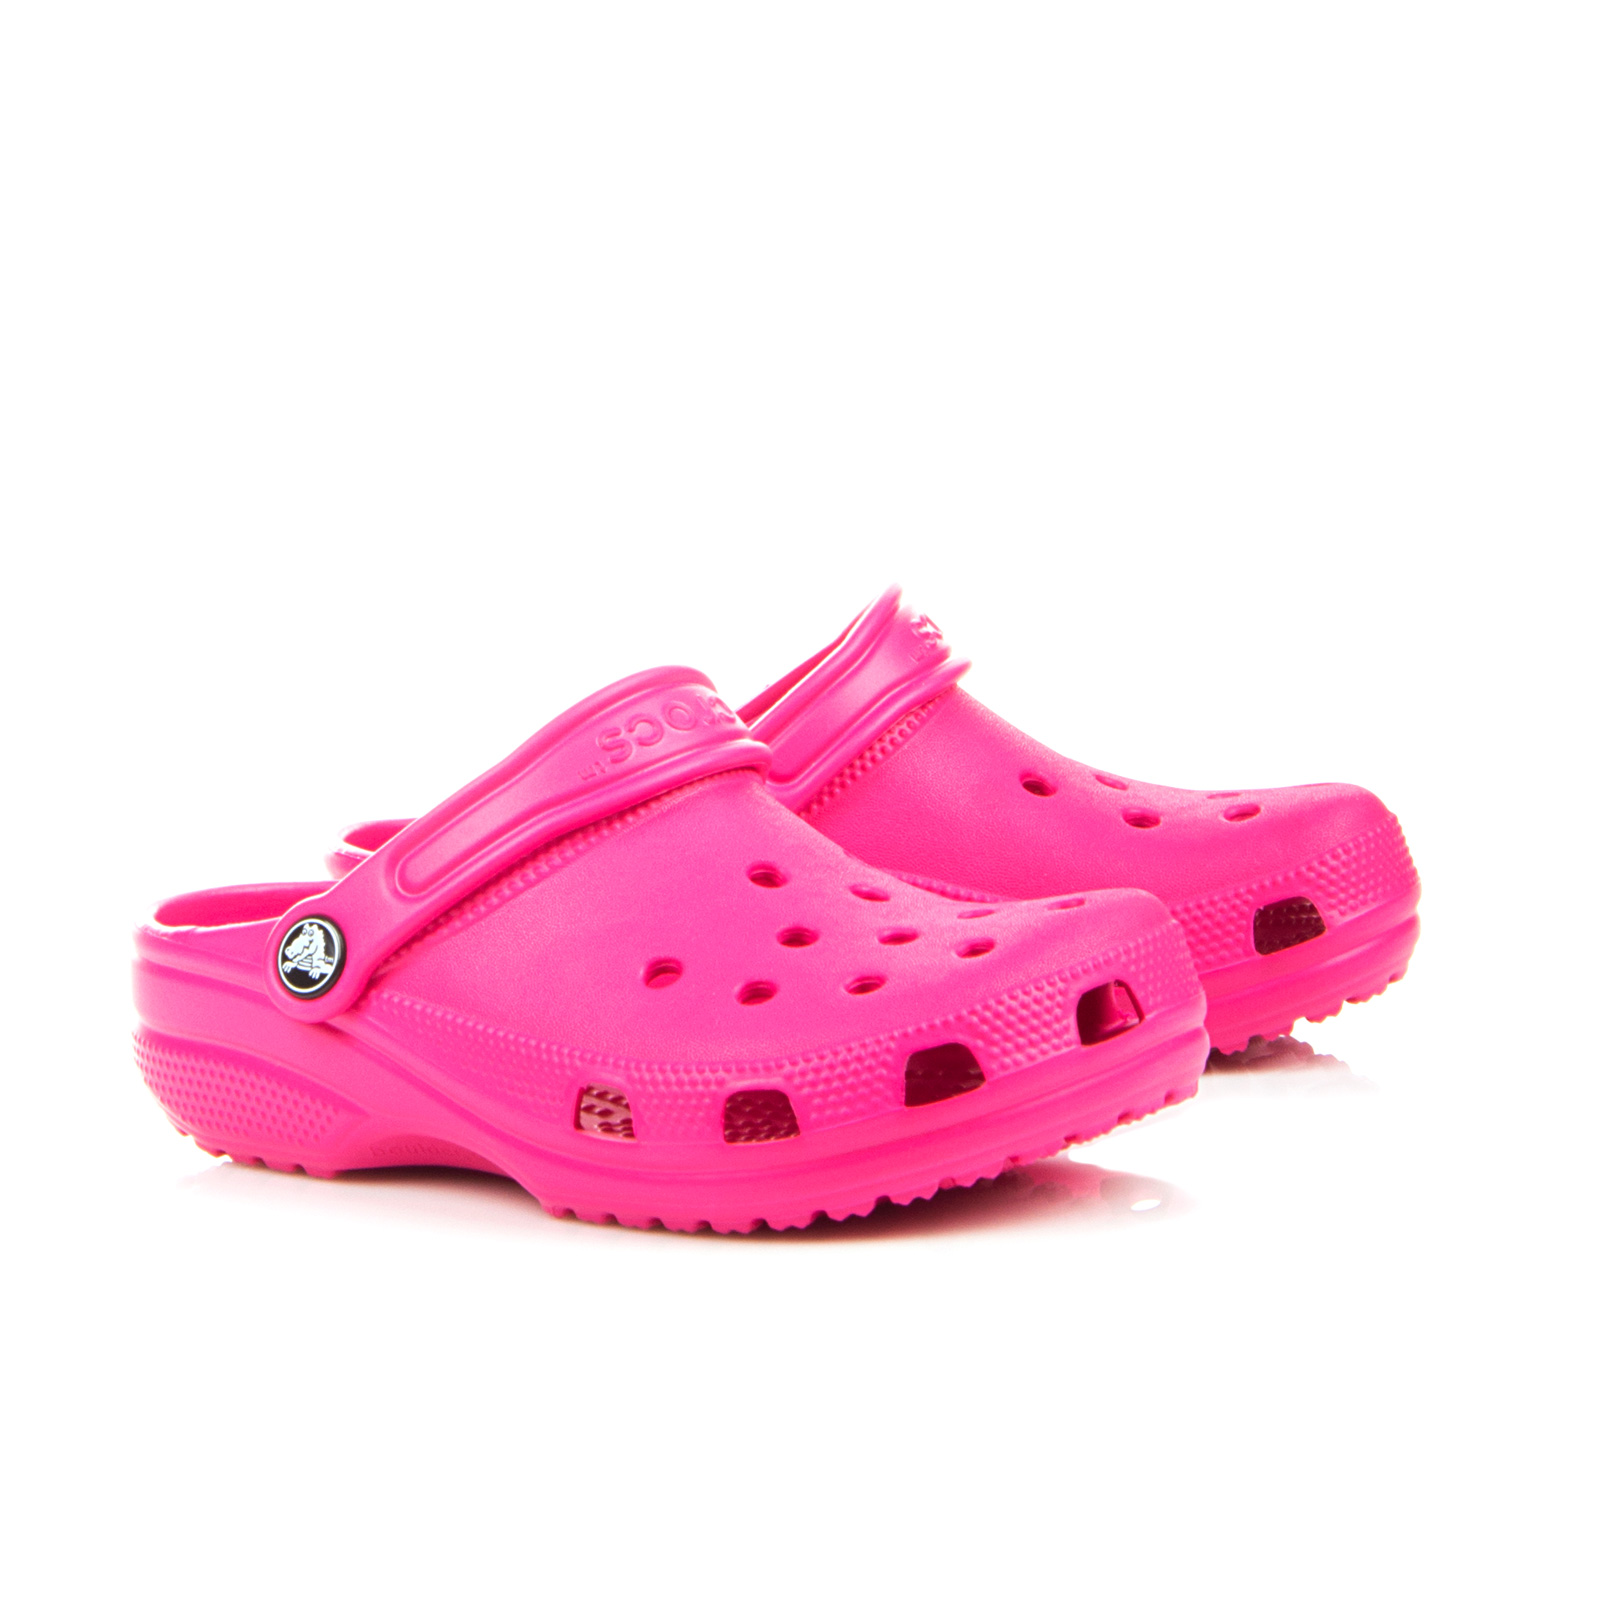 Crocs - CLASSIC CLOG K - CANDY PINK Παιδικά > Παπούτσια > Clogs > Glogs